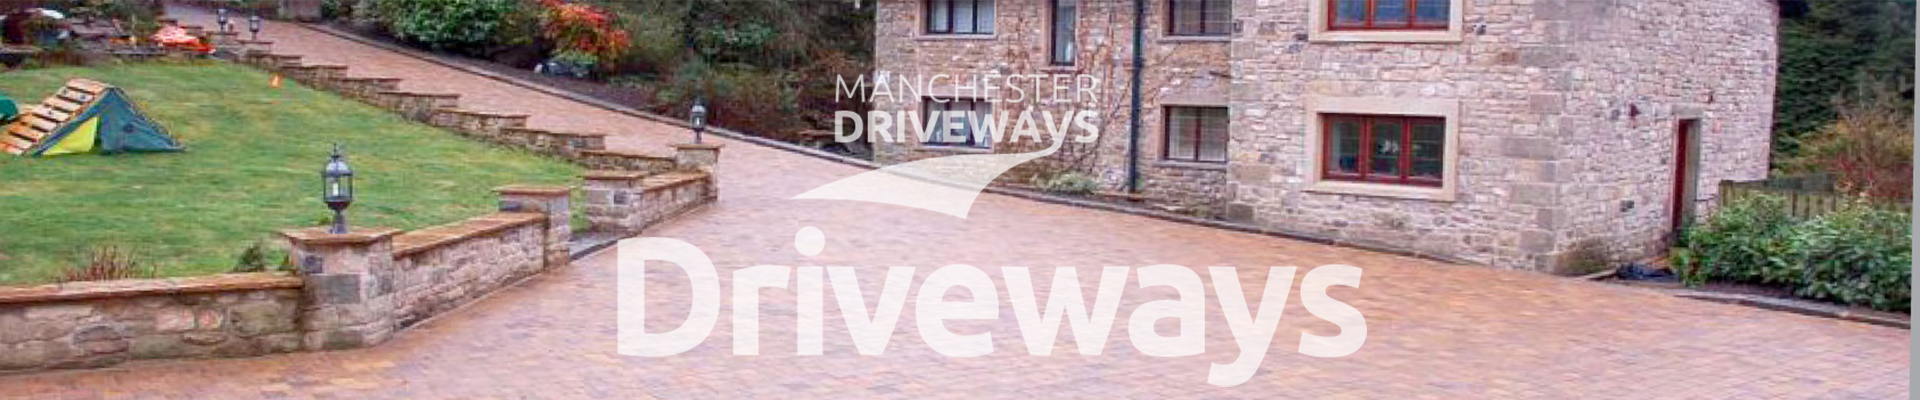 Driveways Manchester